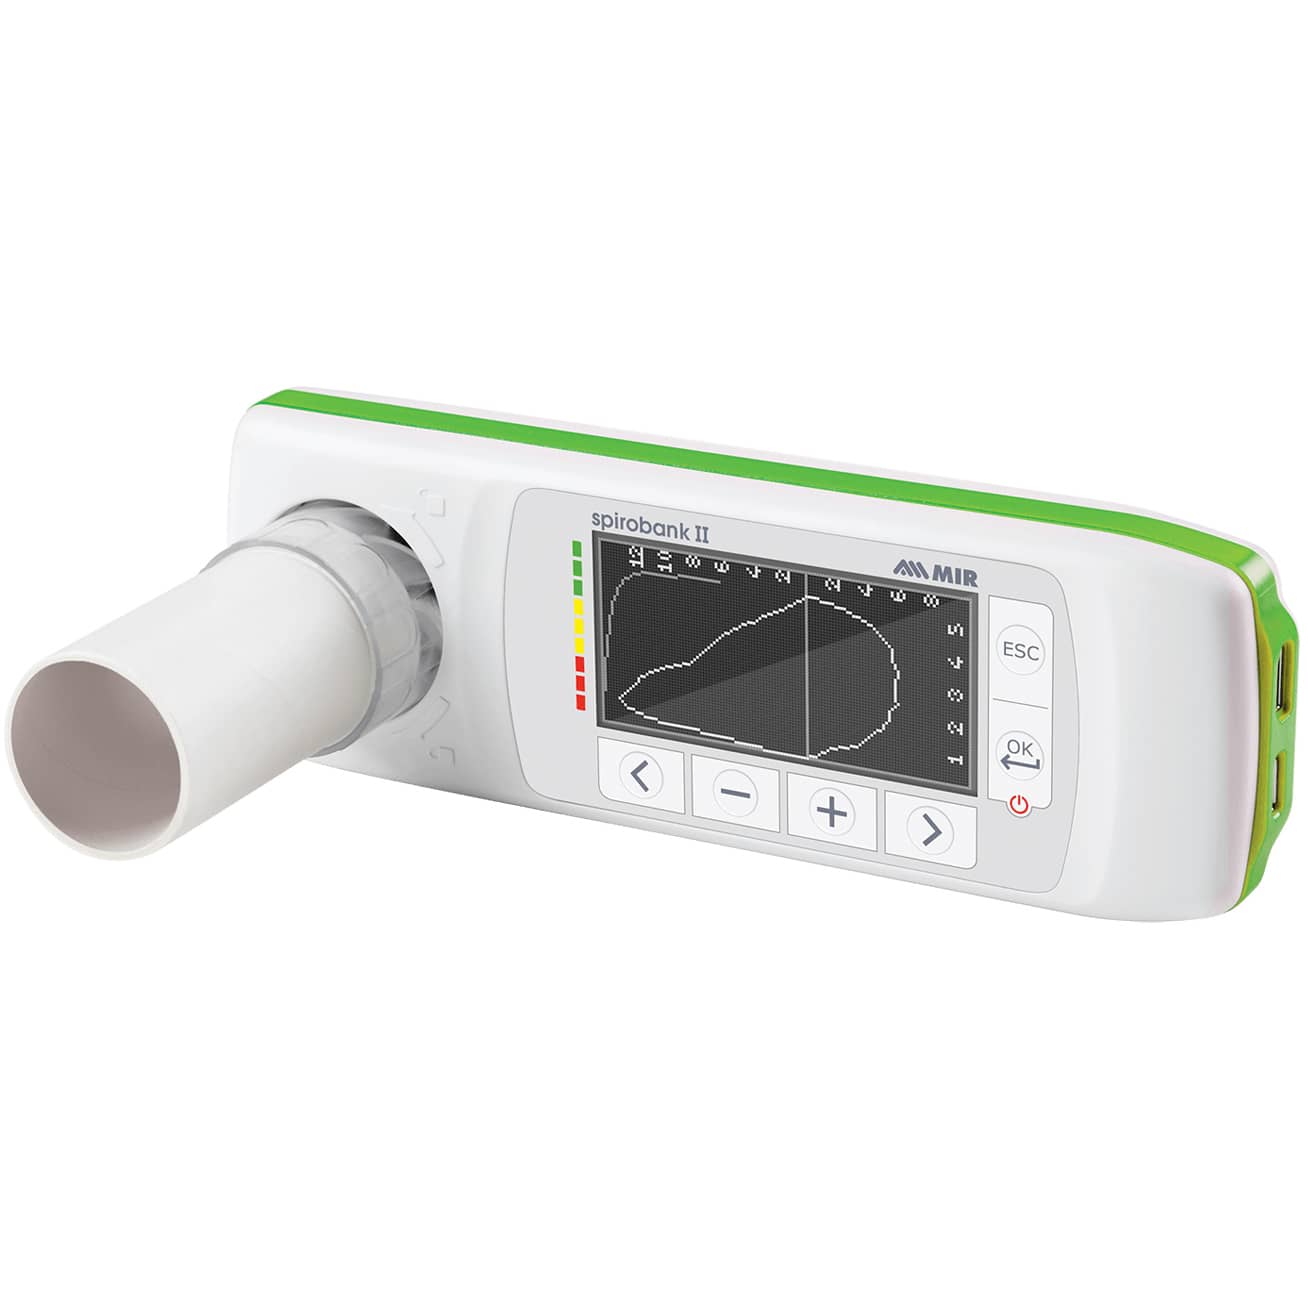 MIR Spirobank II Basic Spirometer ports